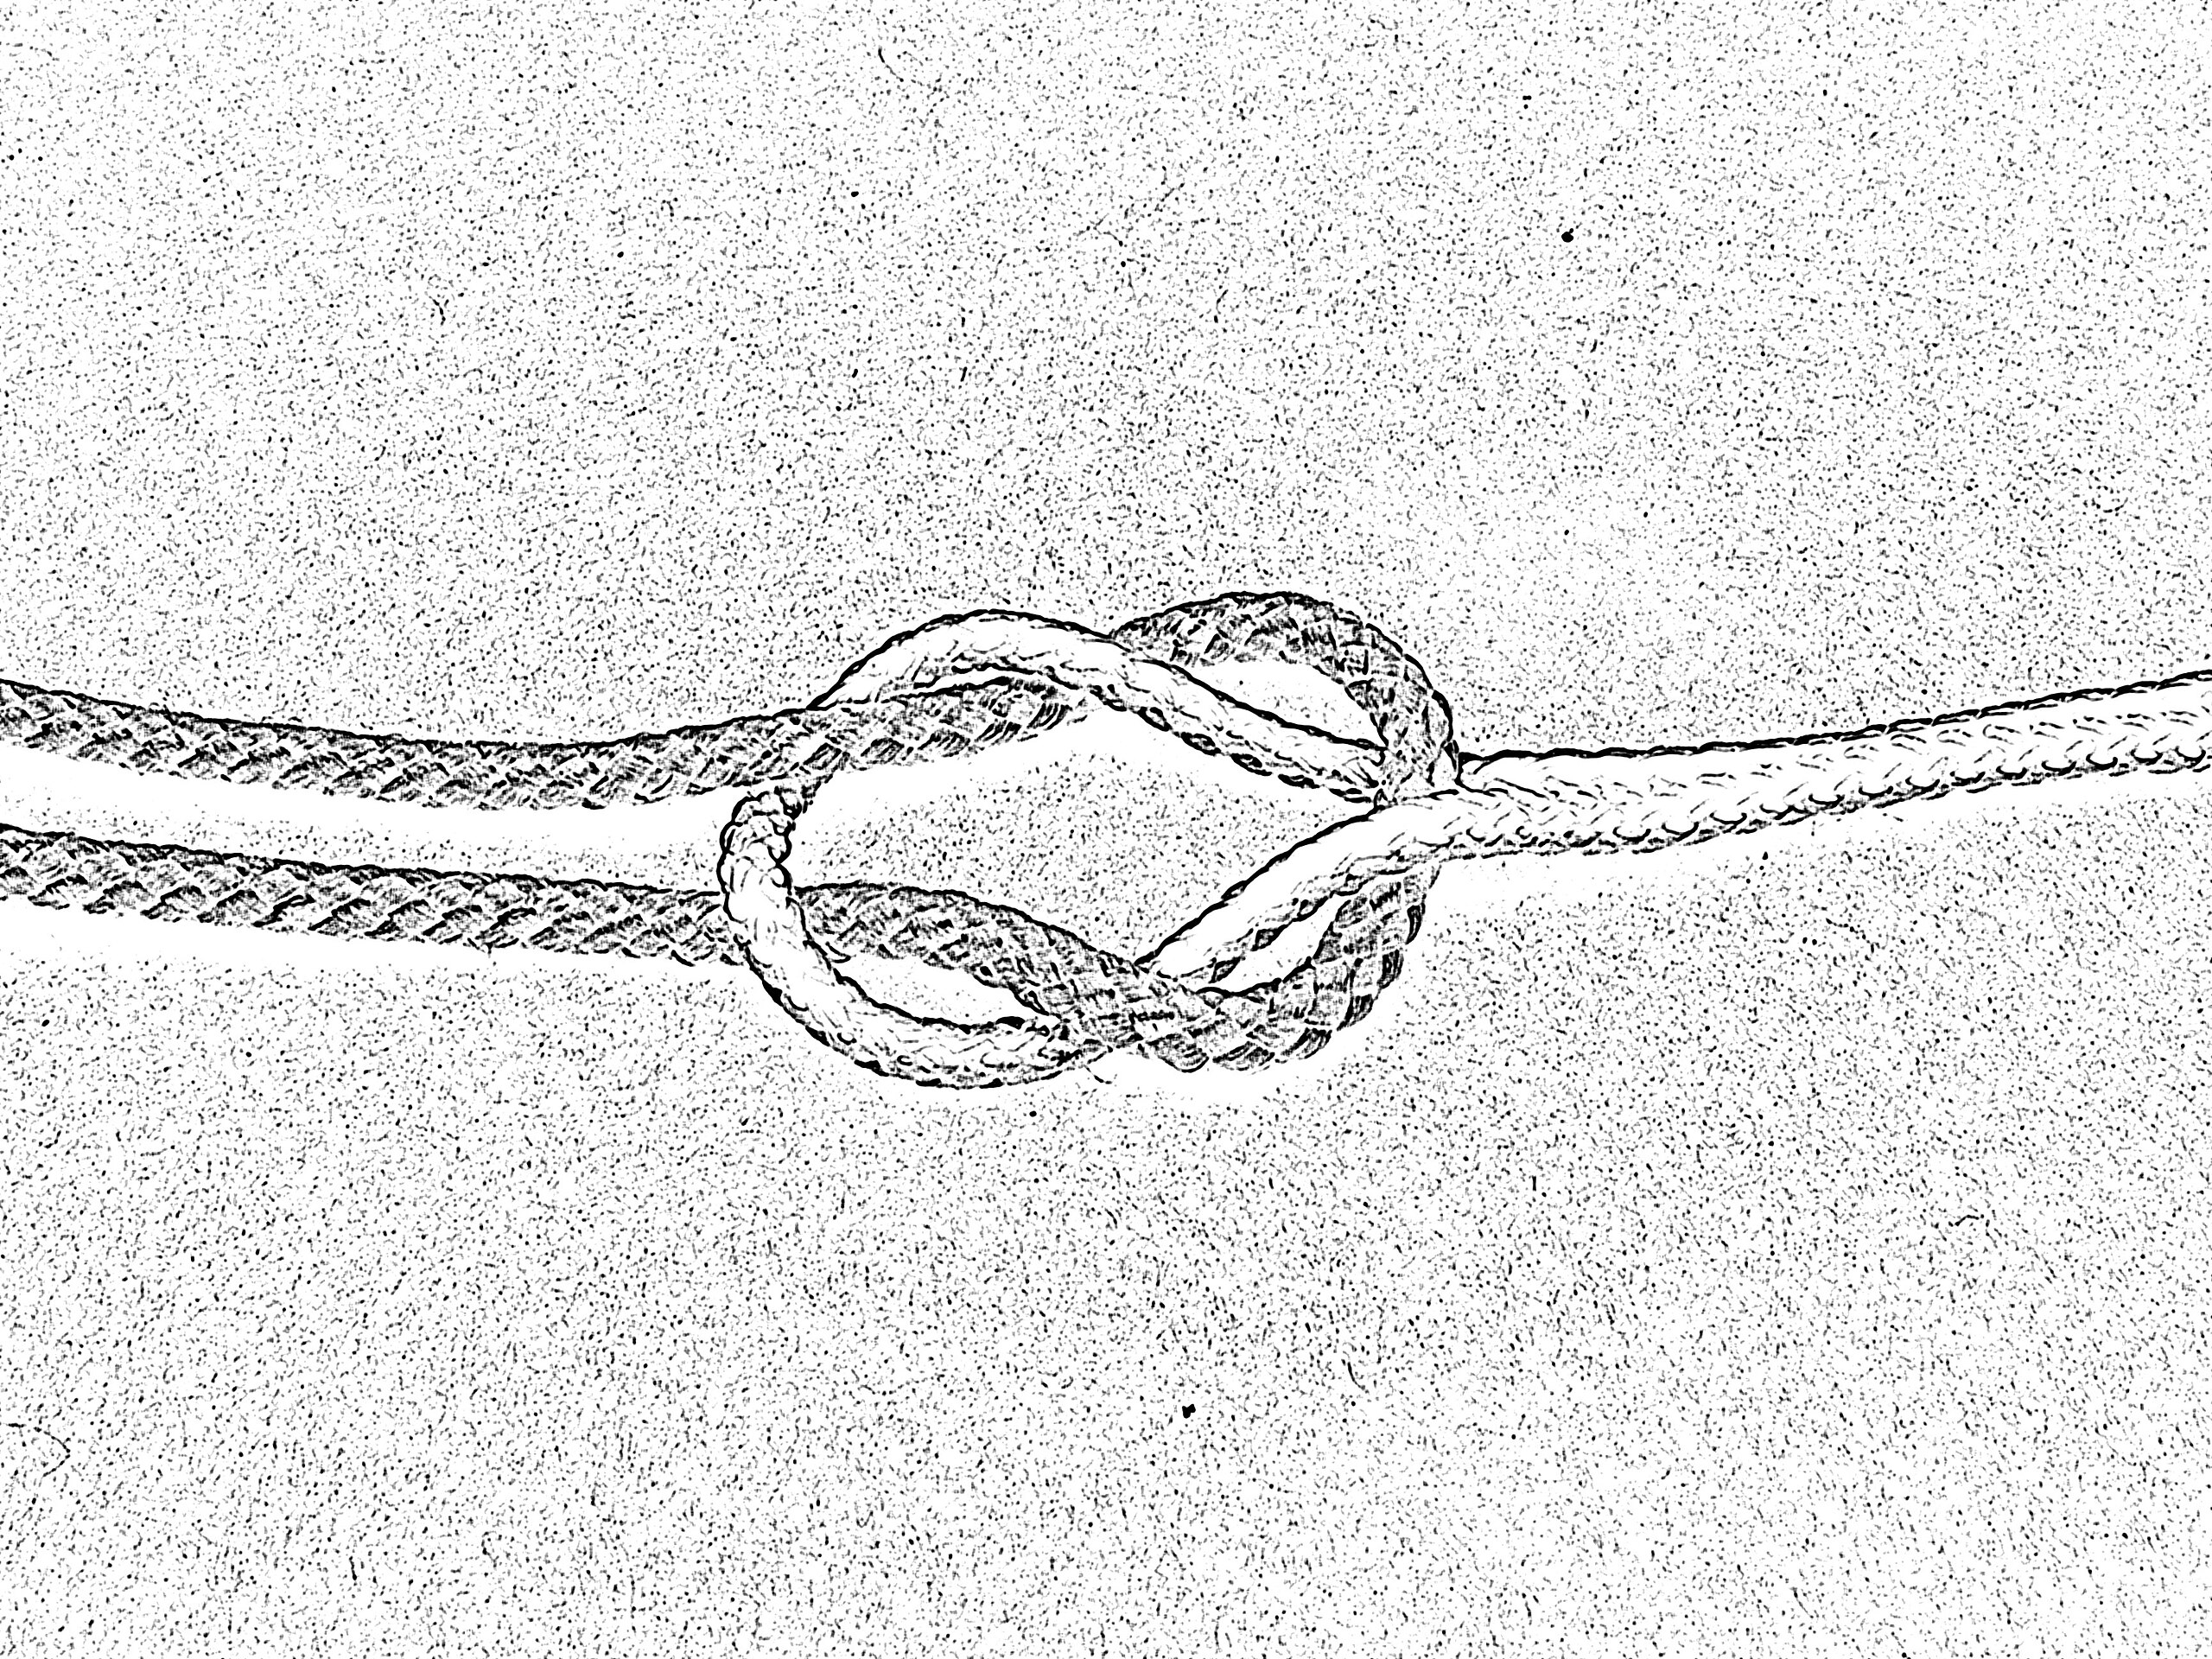 File:Macrame double knot.jpg - Wikimedia Commons